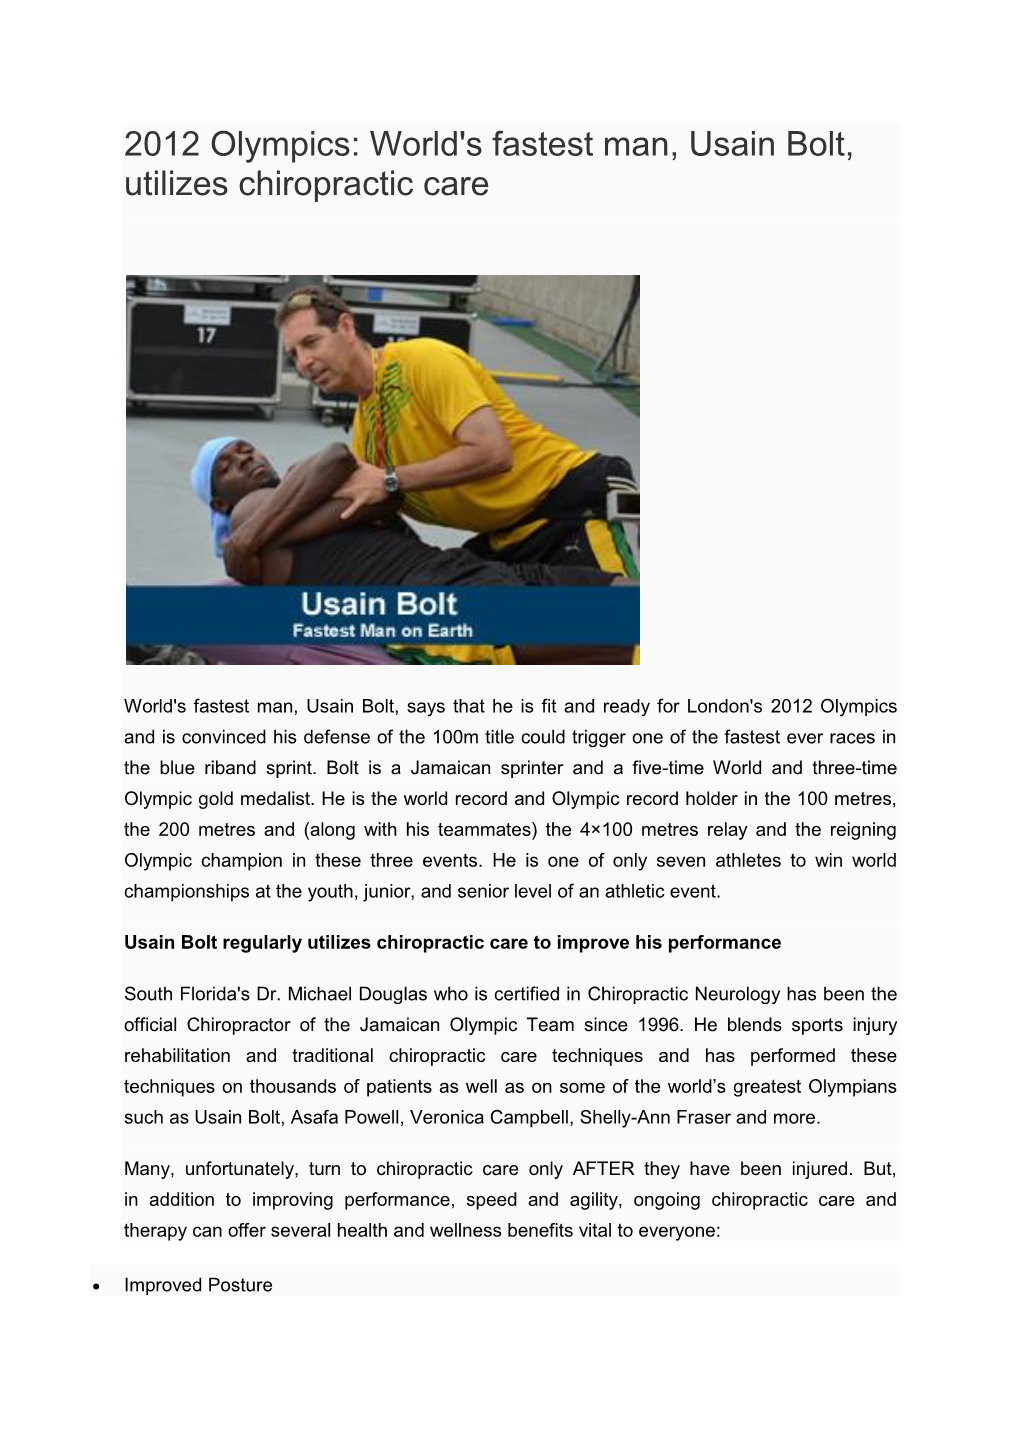 2012 Olympics: World's Fastest Man, Usain Bolt, Utilizes Chiropractic Care